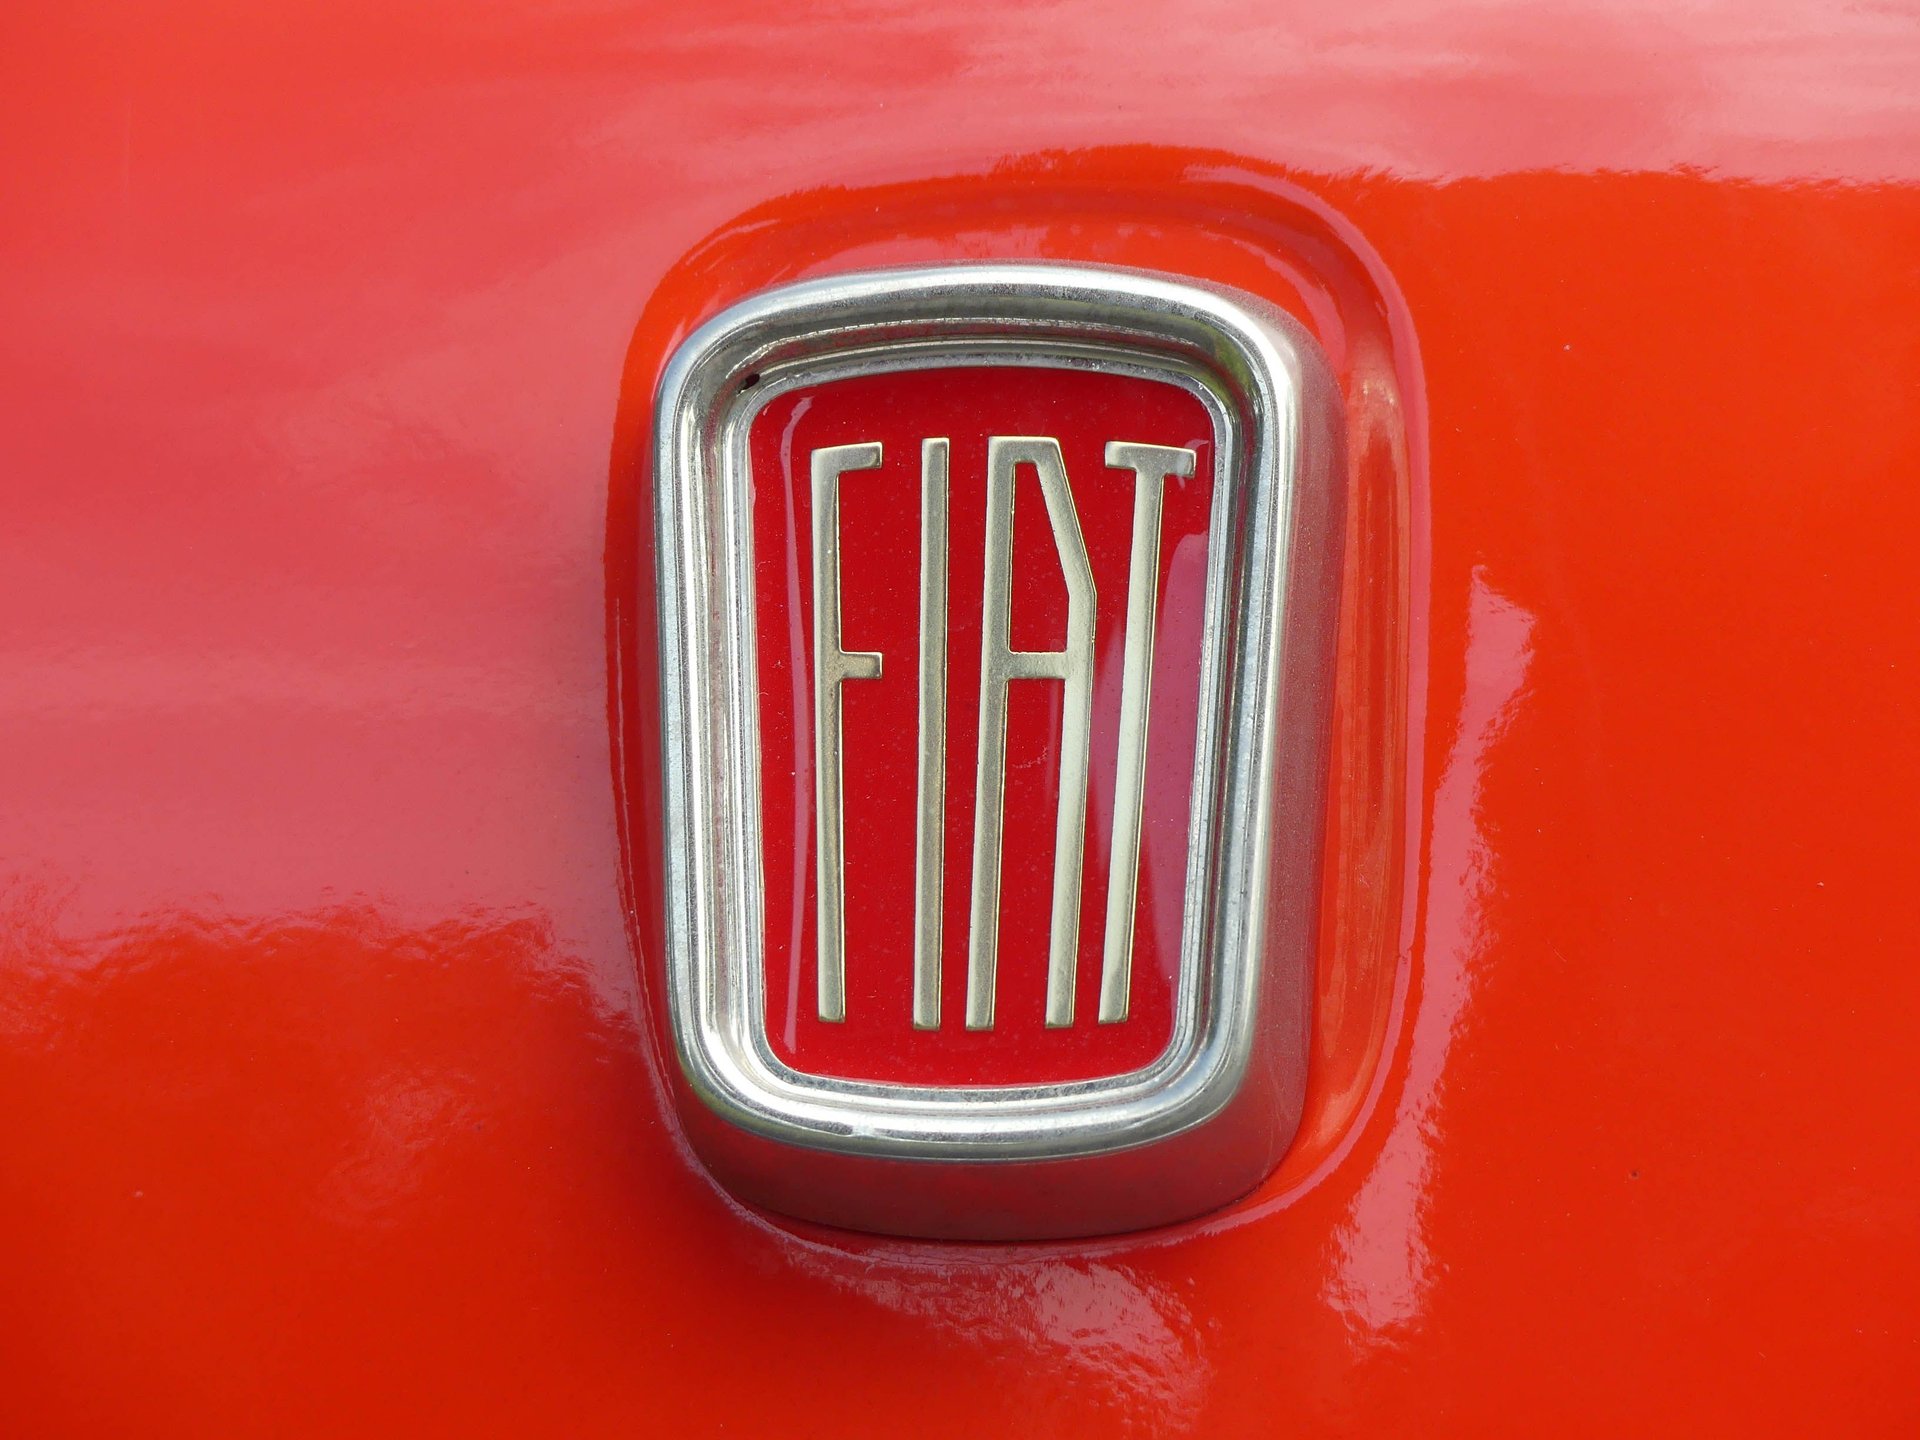 0729-TAMPA | 1969 Fiat 500L | Survivor Classic Cars Services